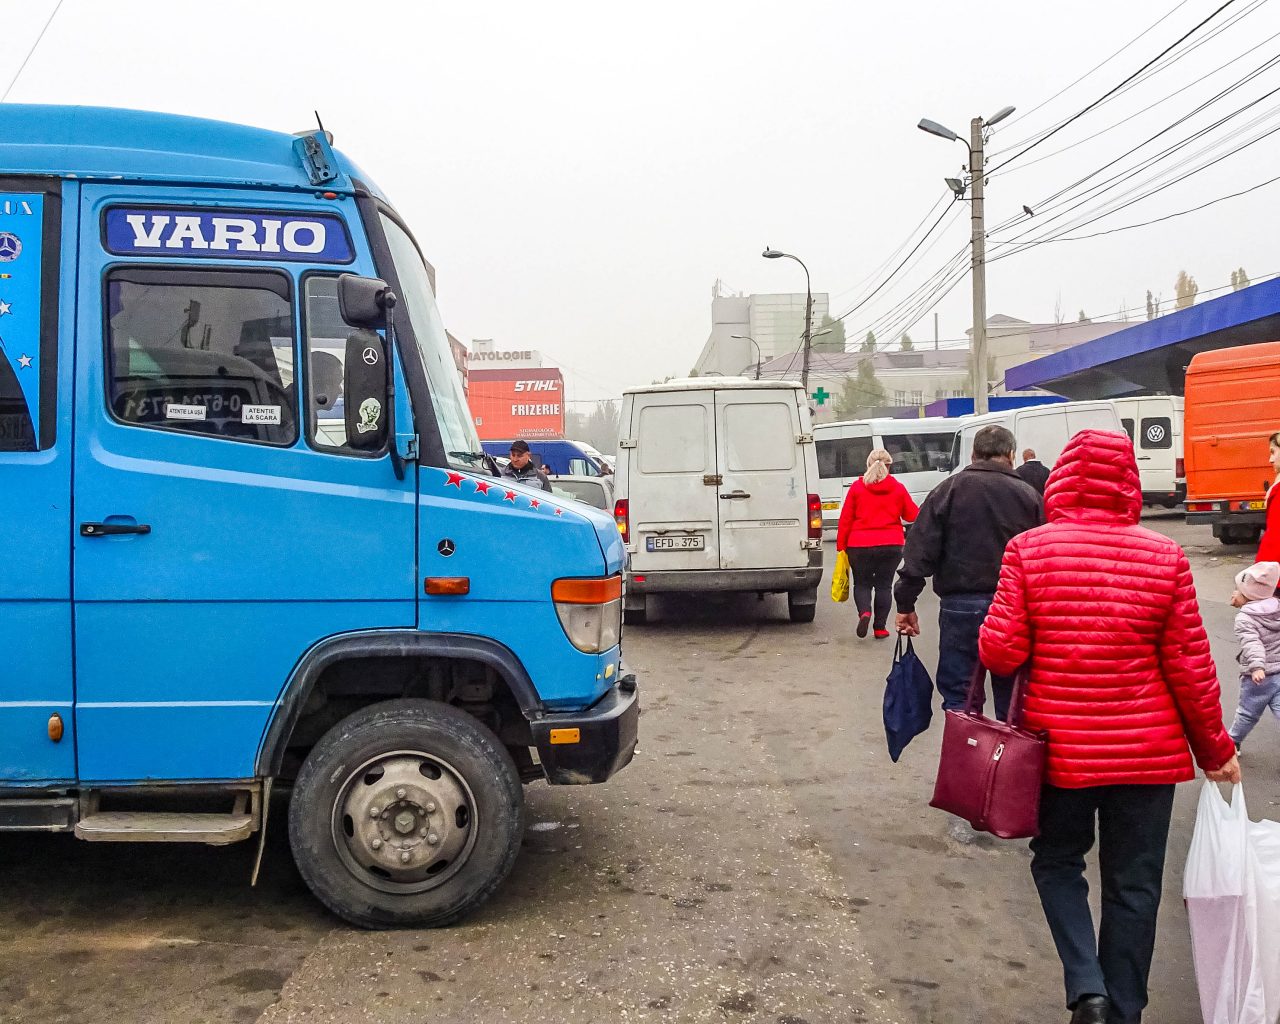 blauwe-bus-voorbijgaande-mensen-chisinau